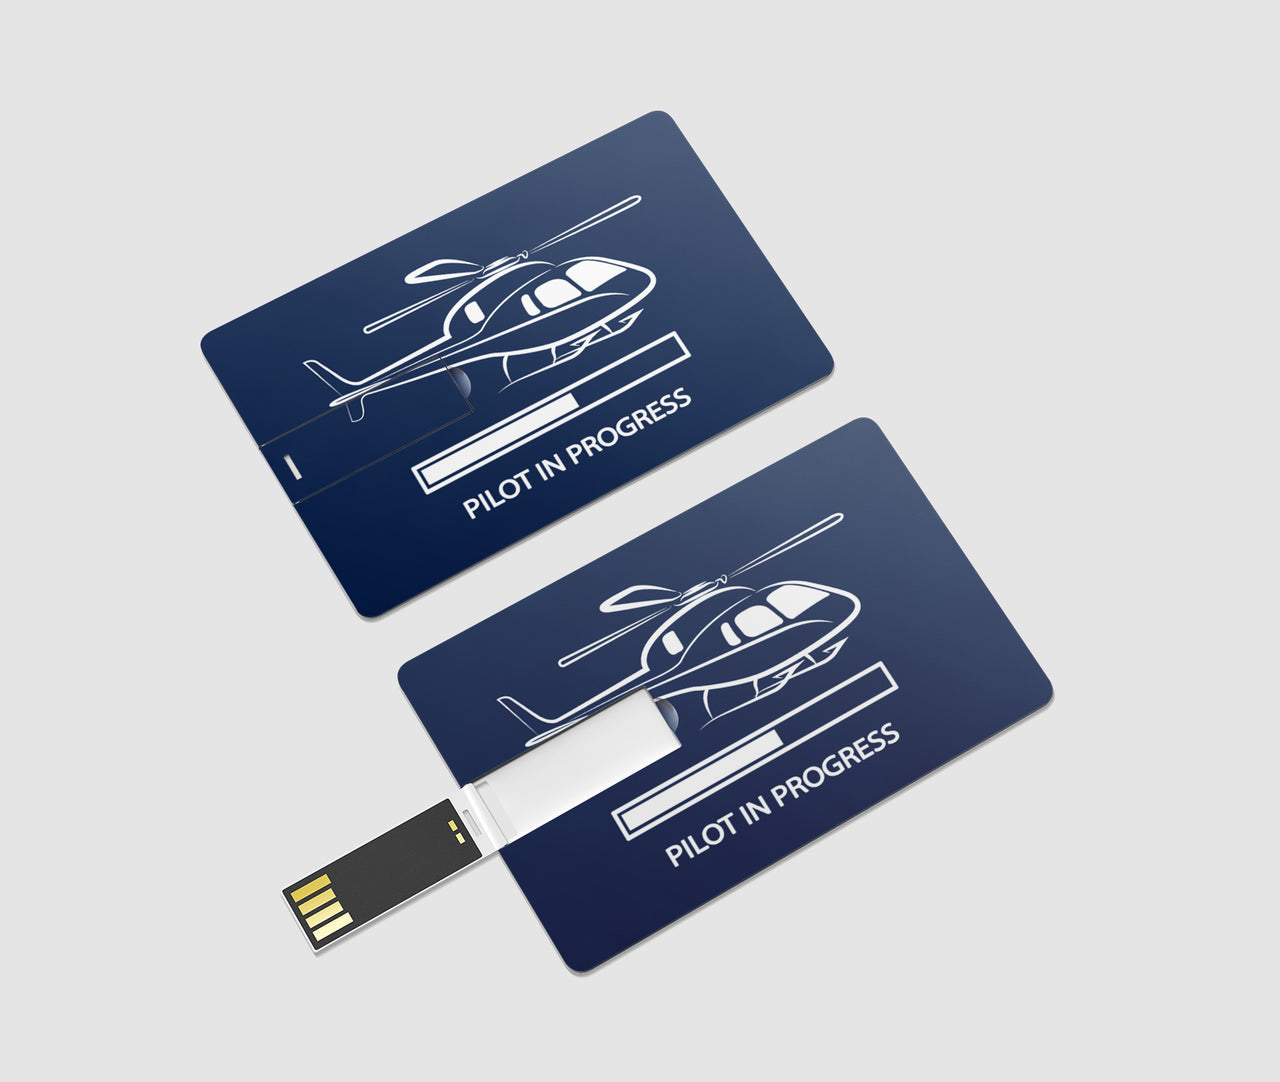 Pilot In Progress (Helicopter) Designed USB Cards